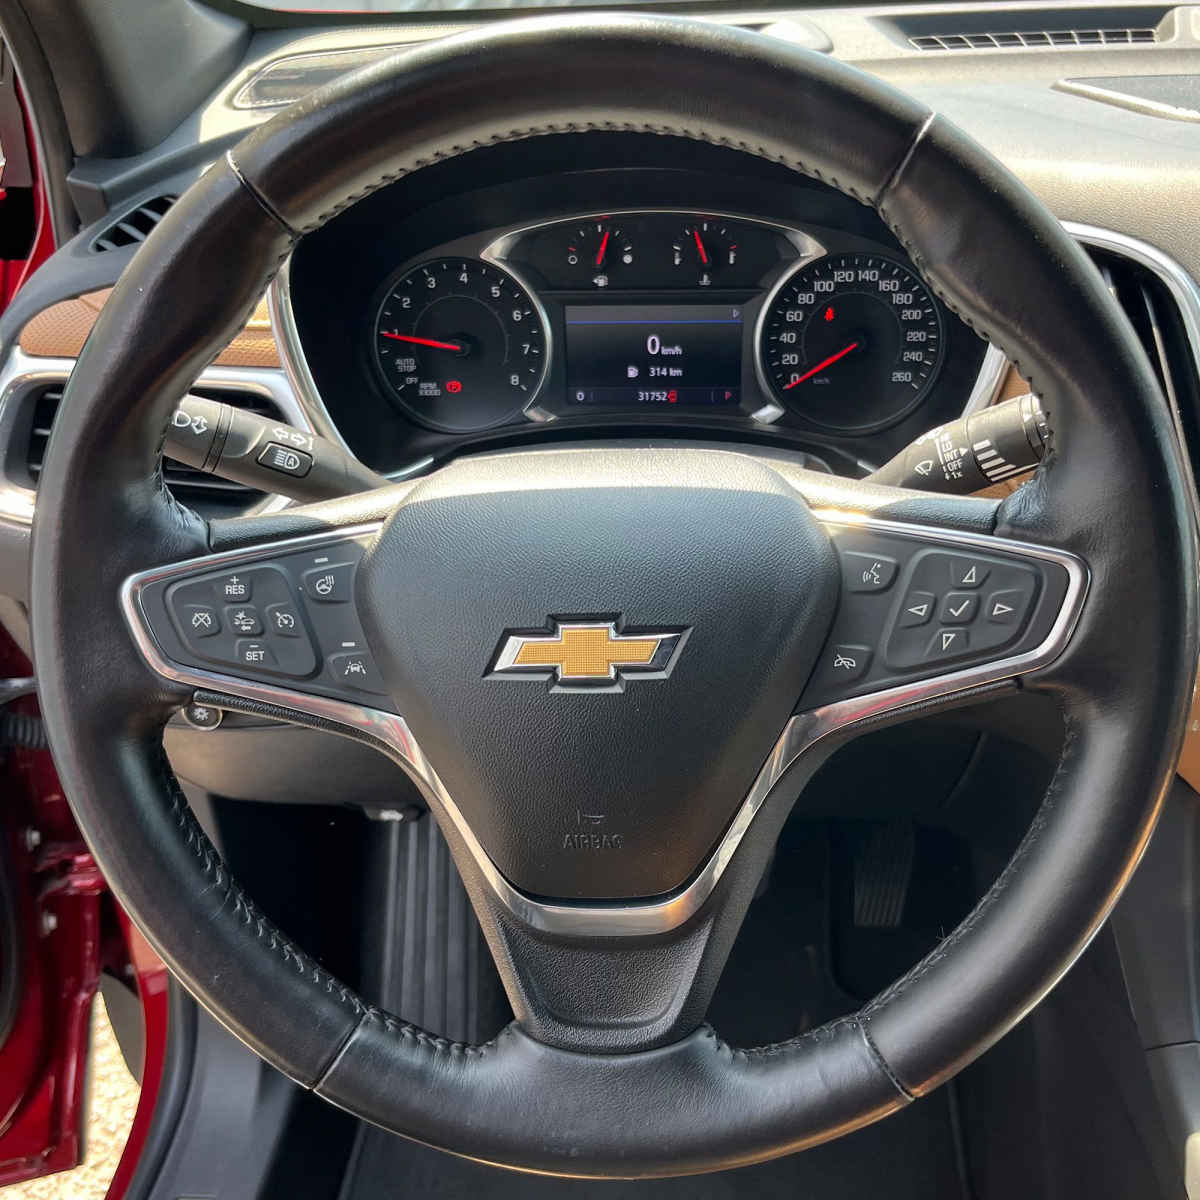 Chevrolet Equinox 2019